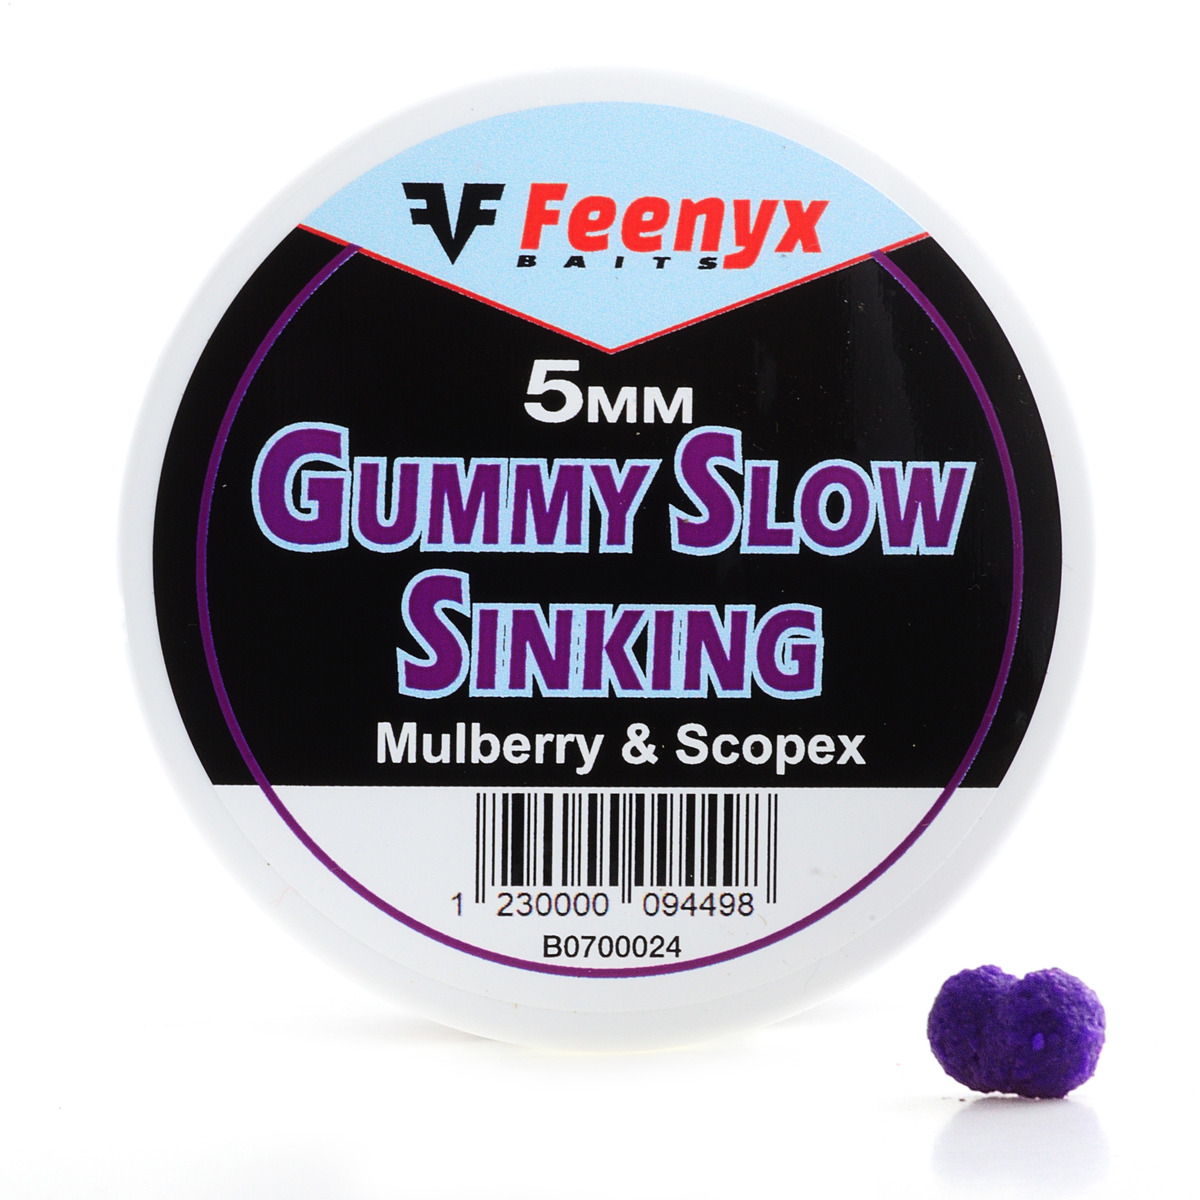 Feenyx Gummy Slow Sinking Mulberry & Scopex - 5 mm